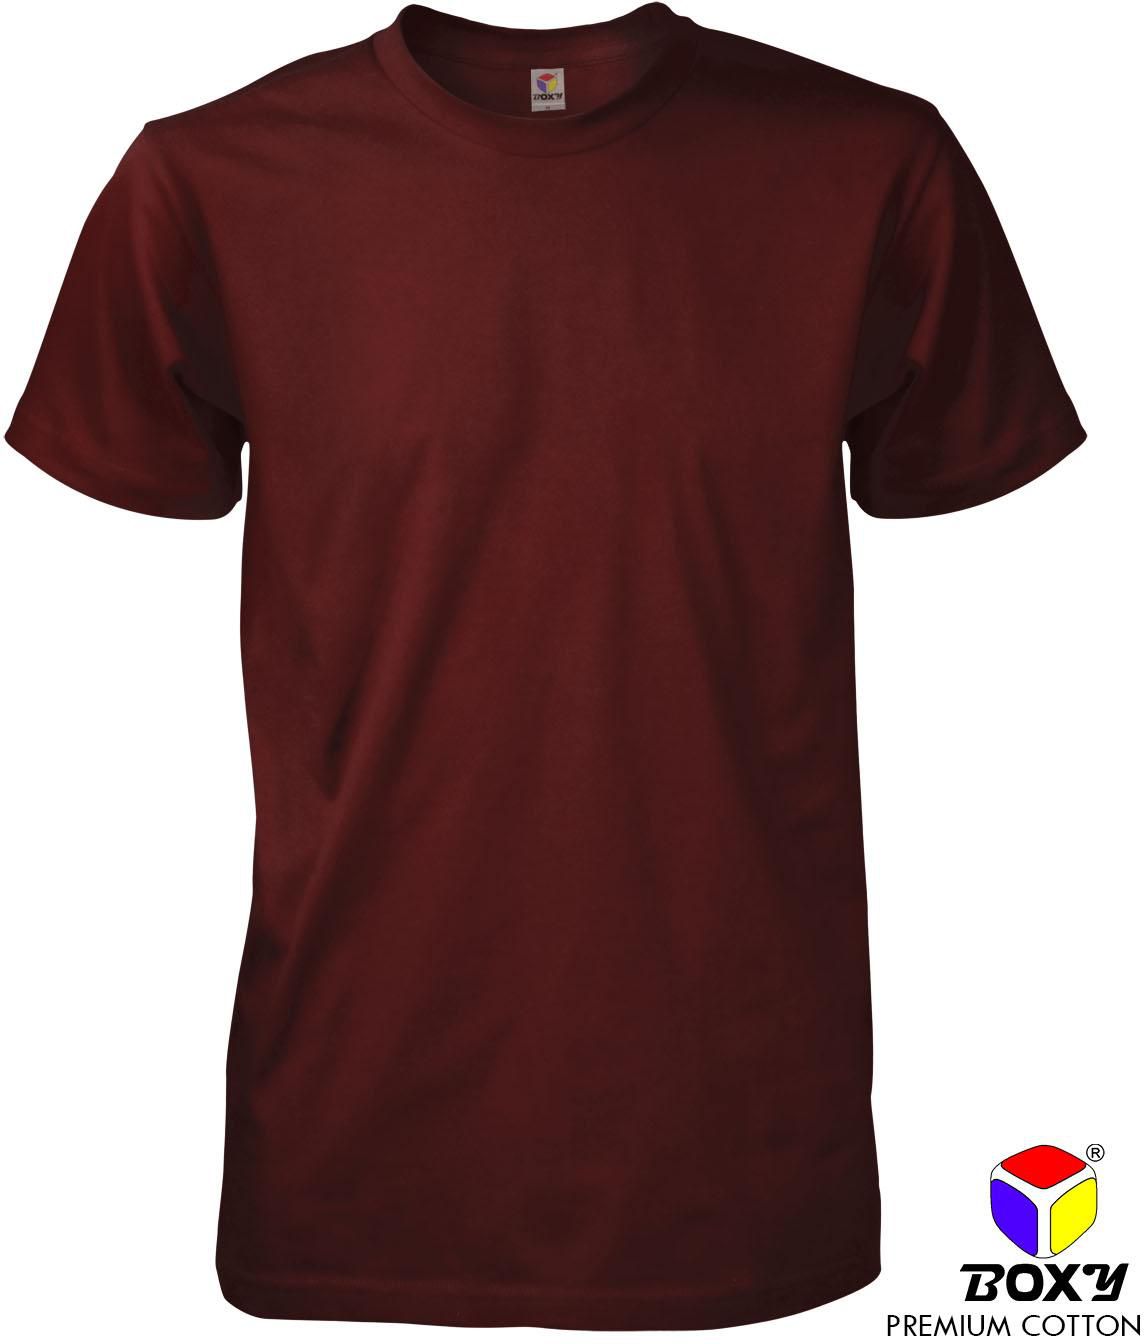 BOXY Premium Cotton Round Neck T-shirt - 7 Sizes (Maroon)